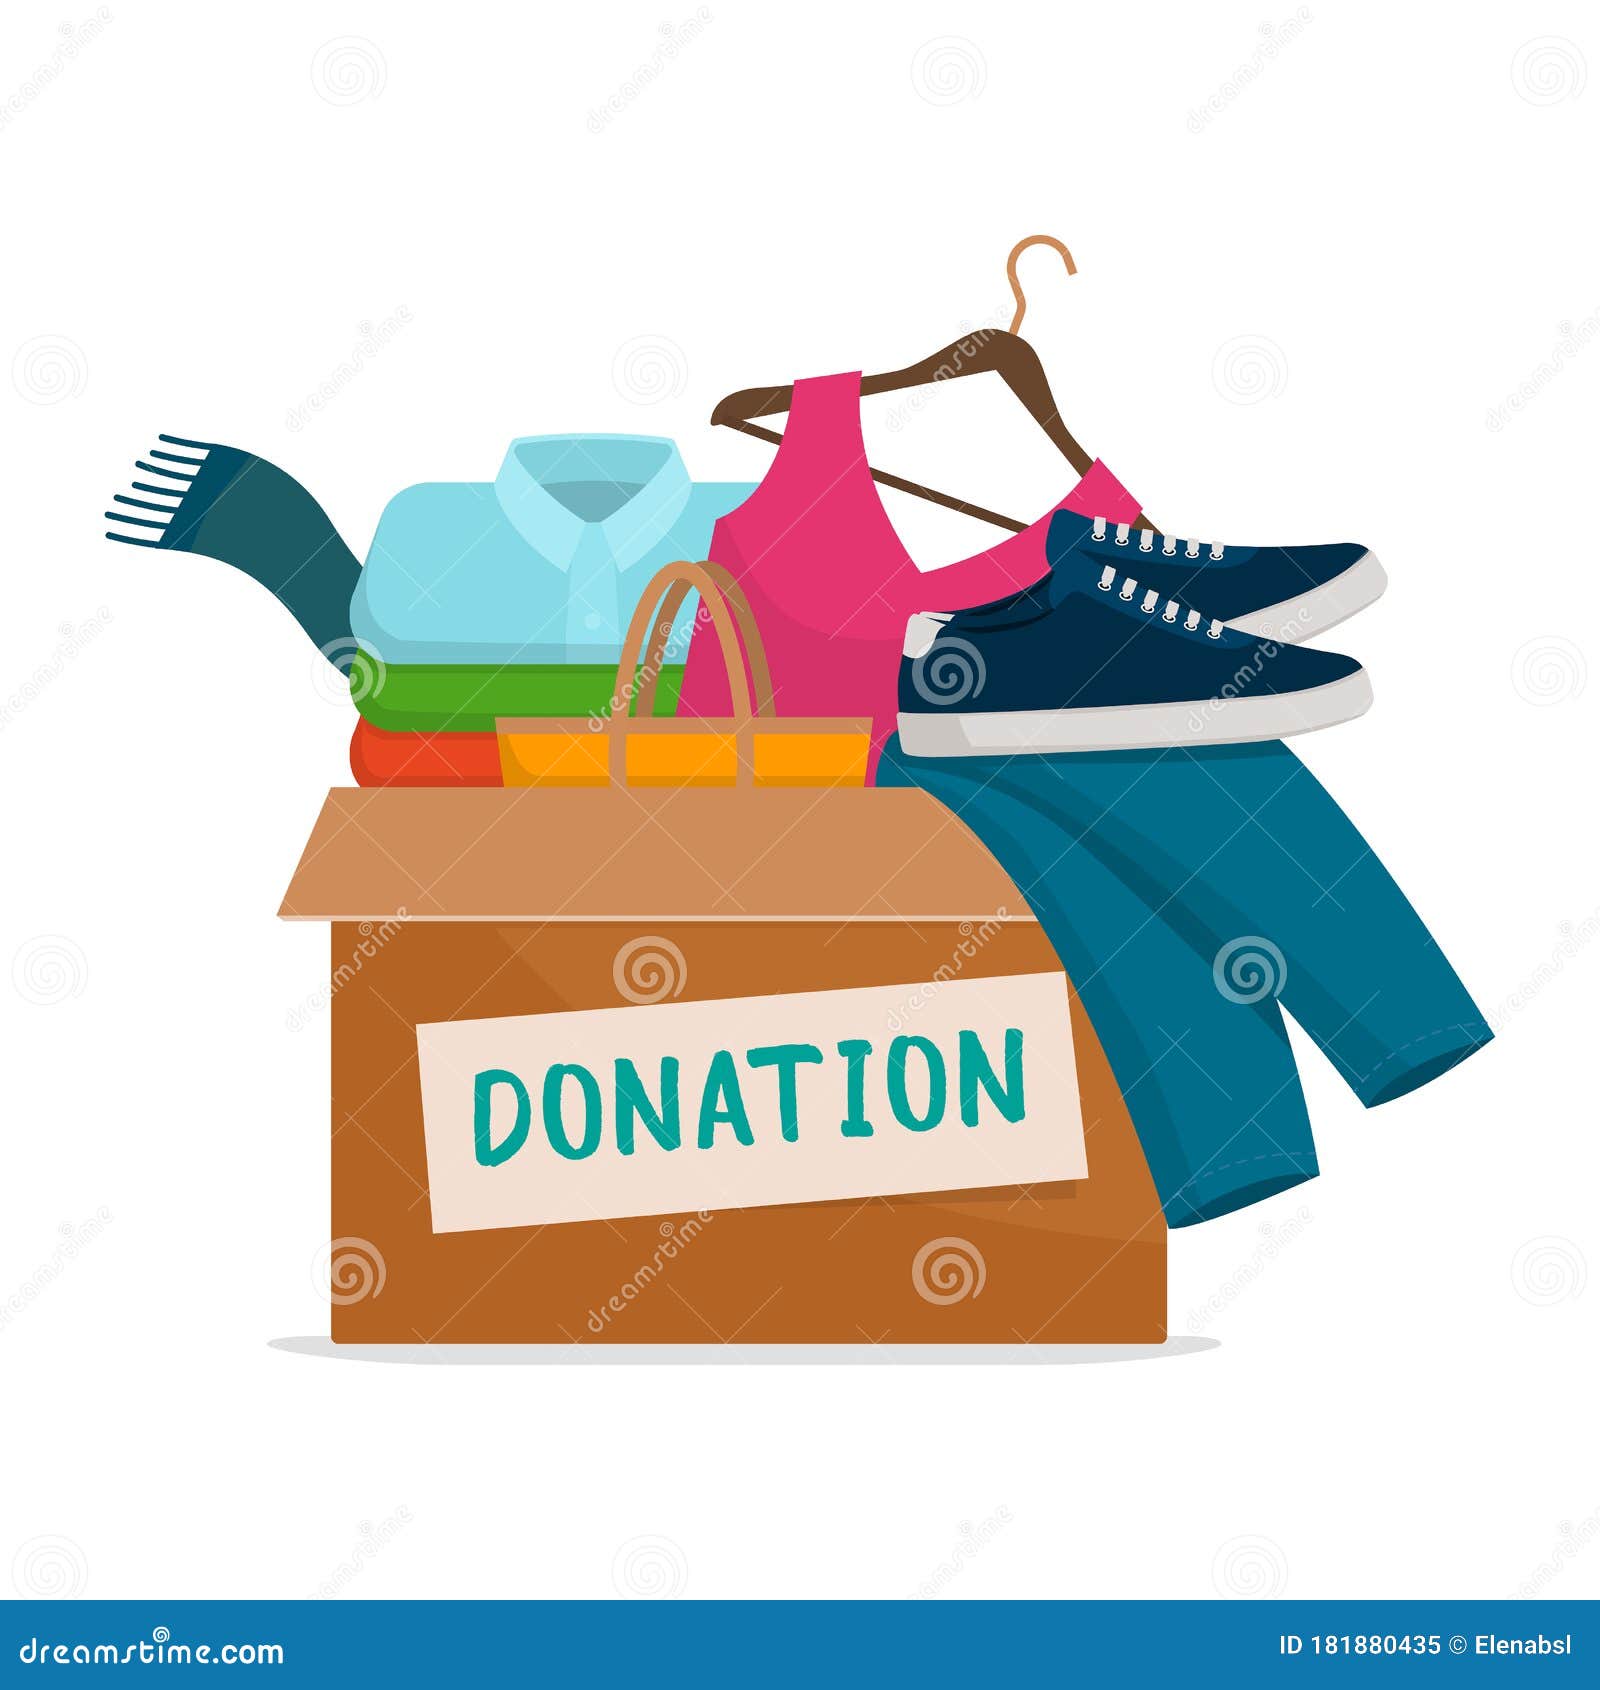 clothing donation box